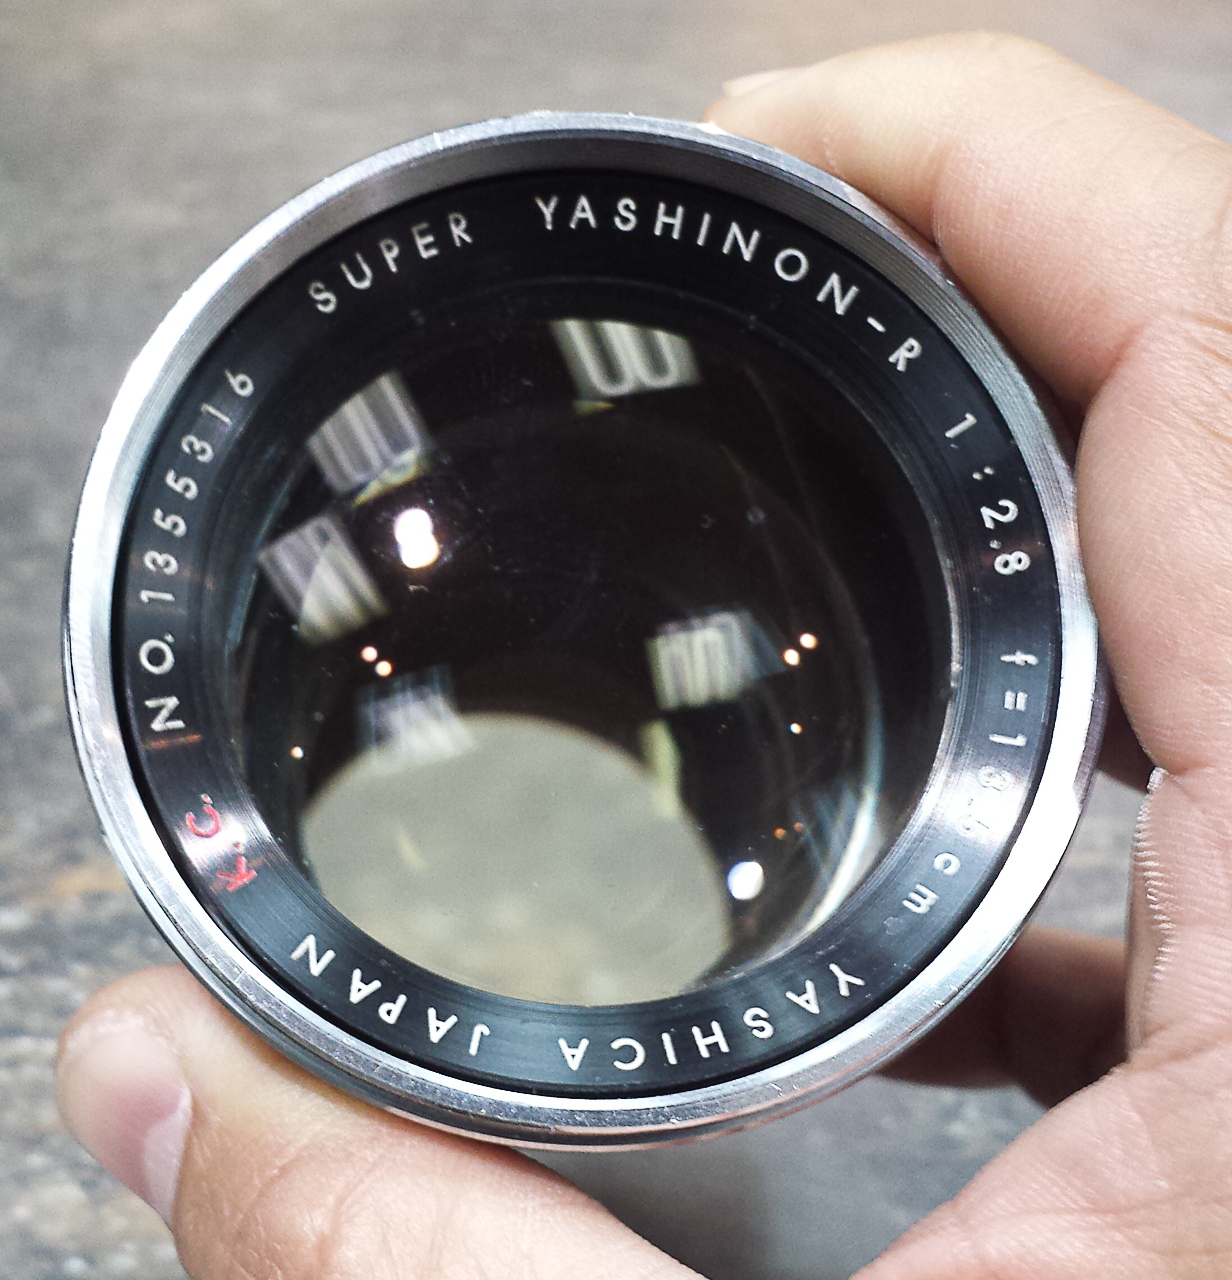 Super Yashinon-R 1:2.8 fu003d13.5cm Yashica Japan K.C.